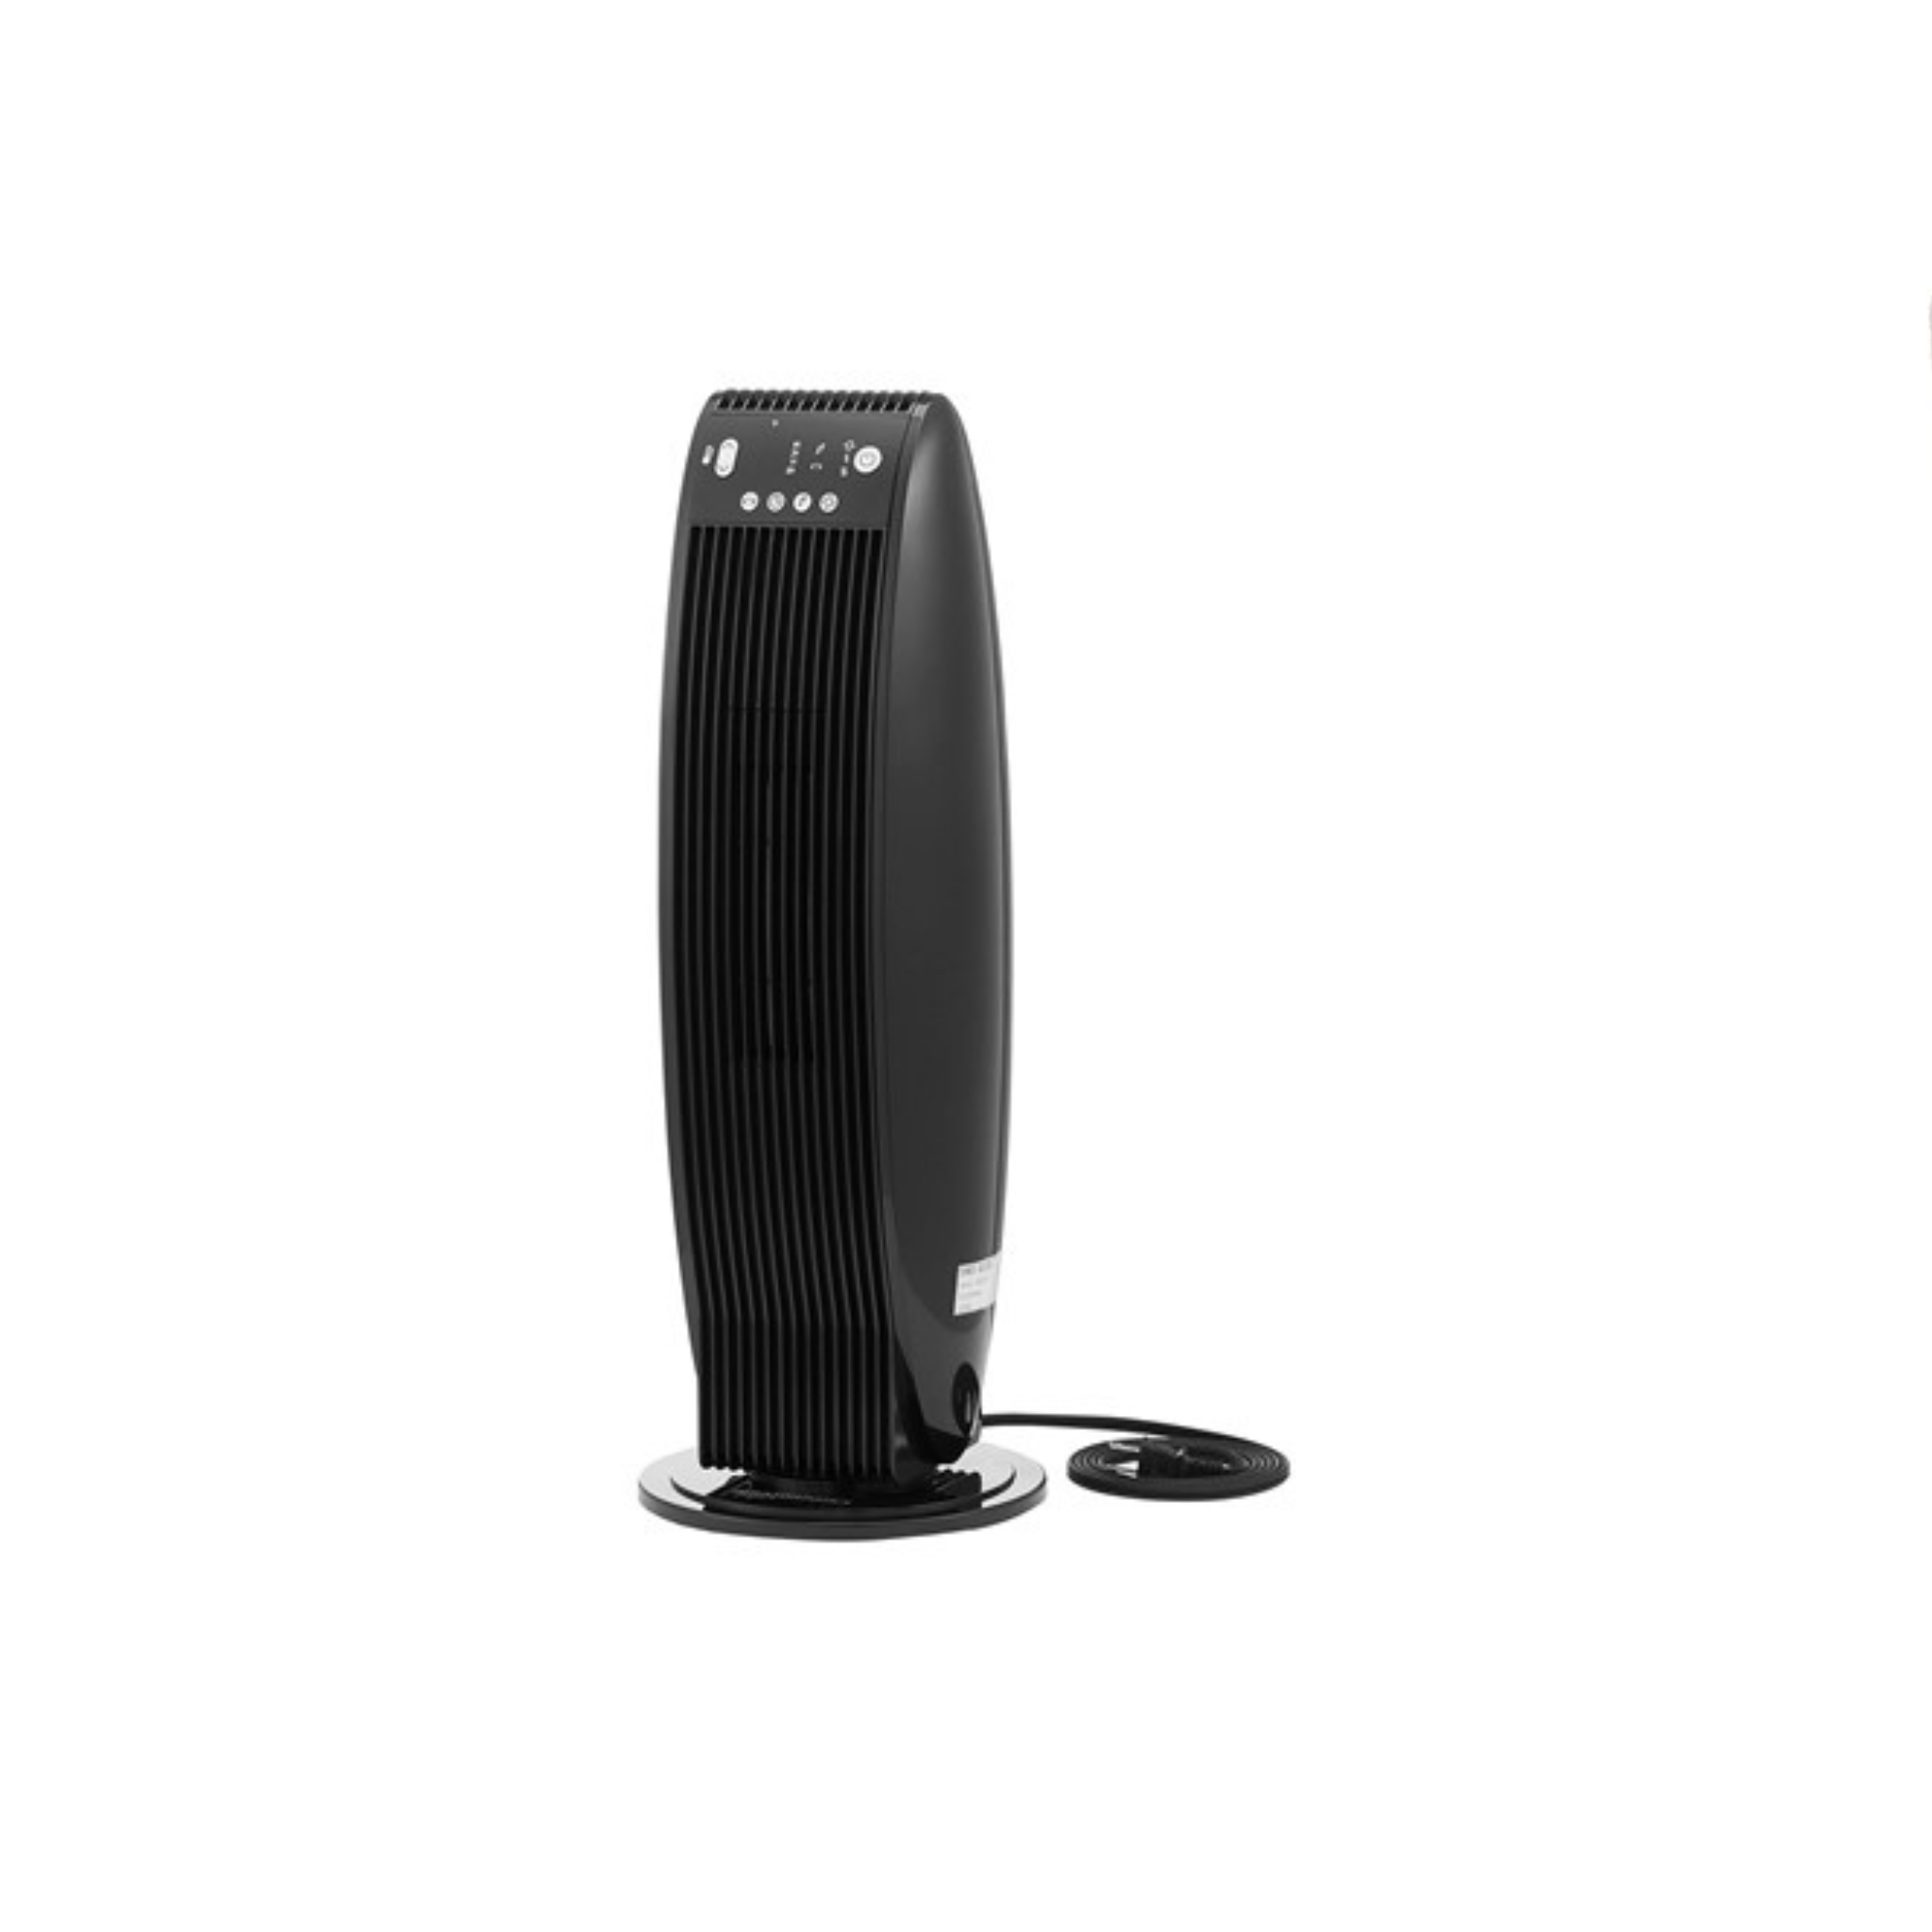 Amazon Basics Digital Tower Heater 23 Inch